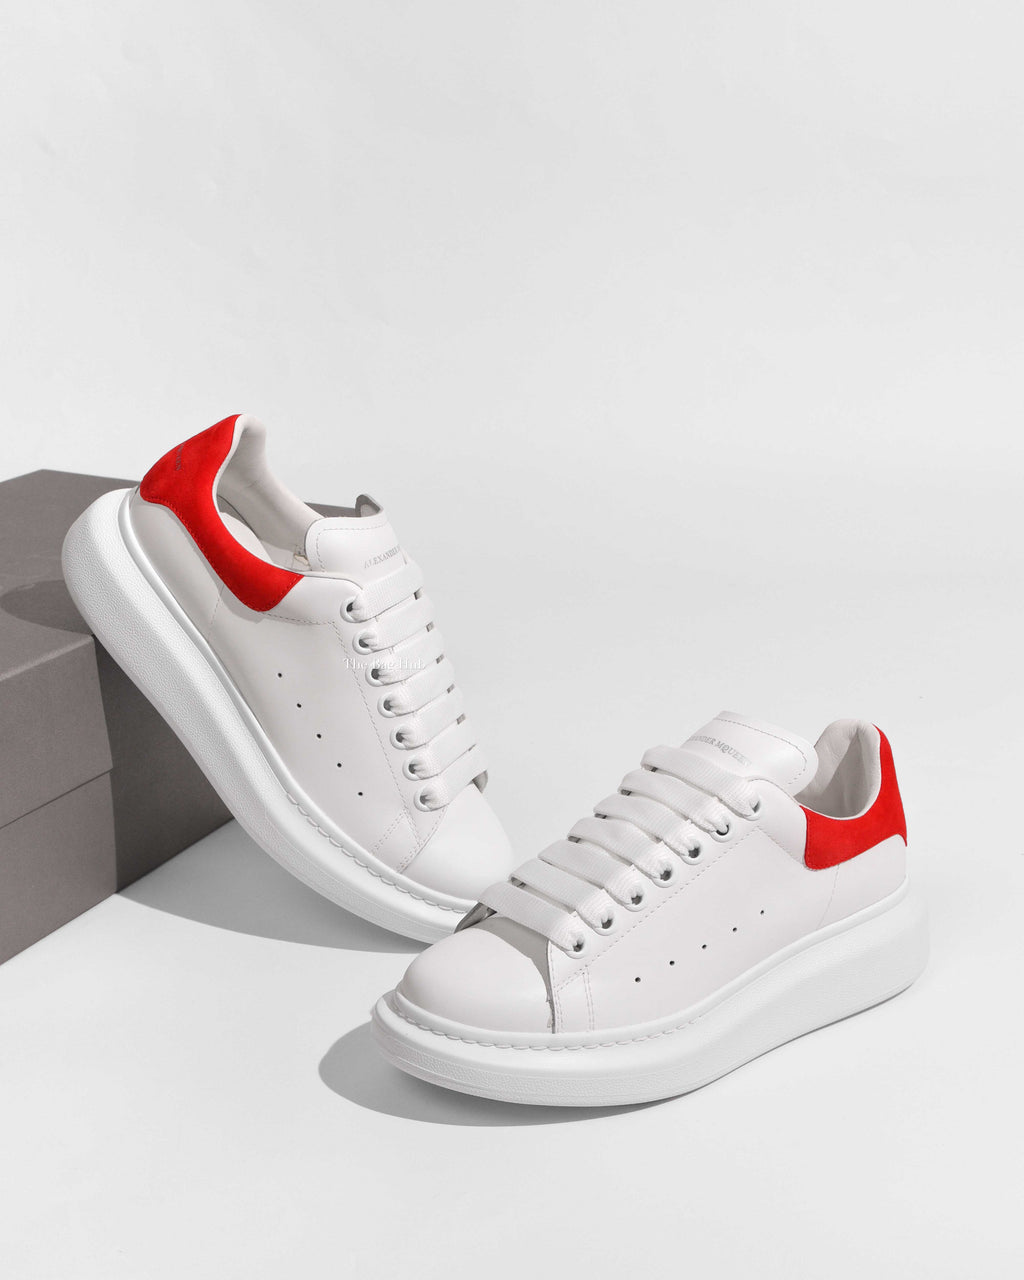 Alexander McQueen White/Lust Red Suede Heeltab Oversized Sneakers Size 38